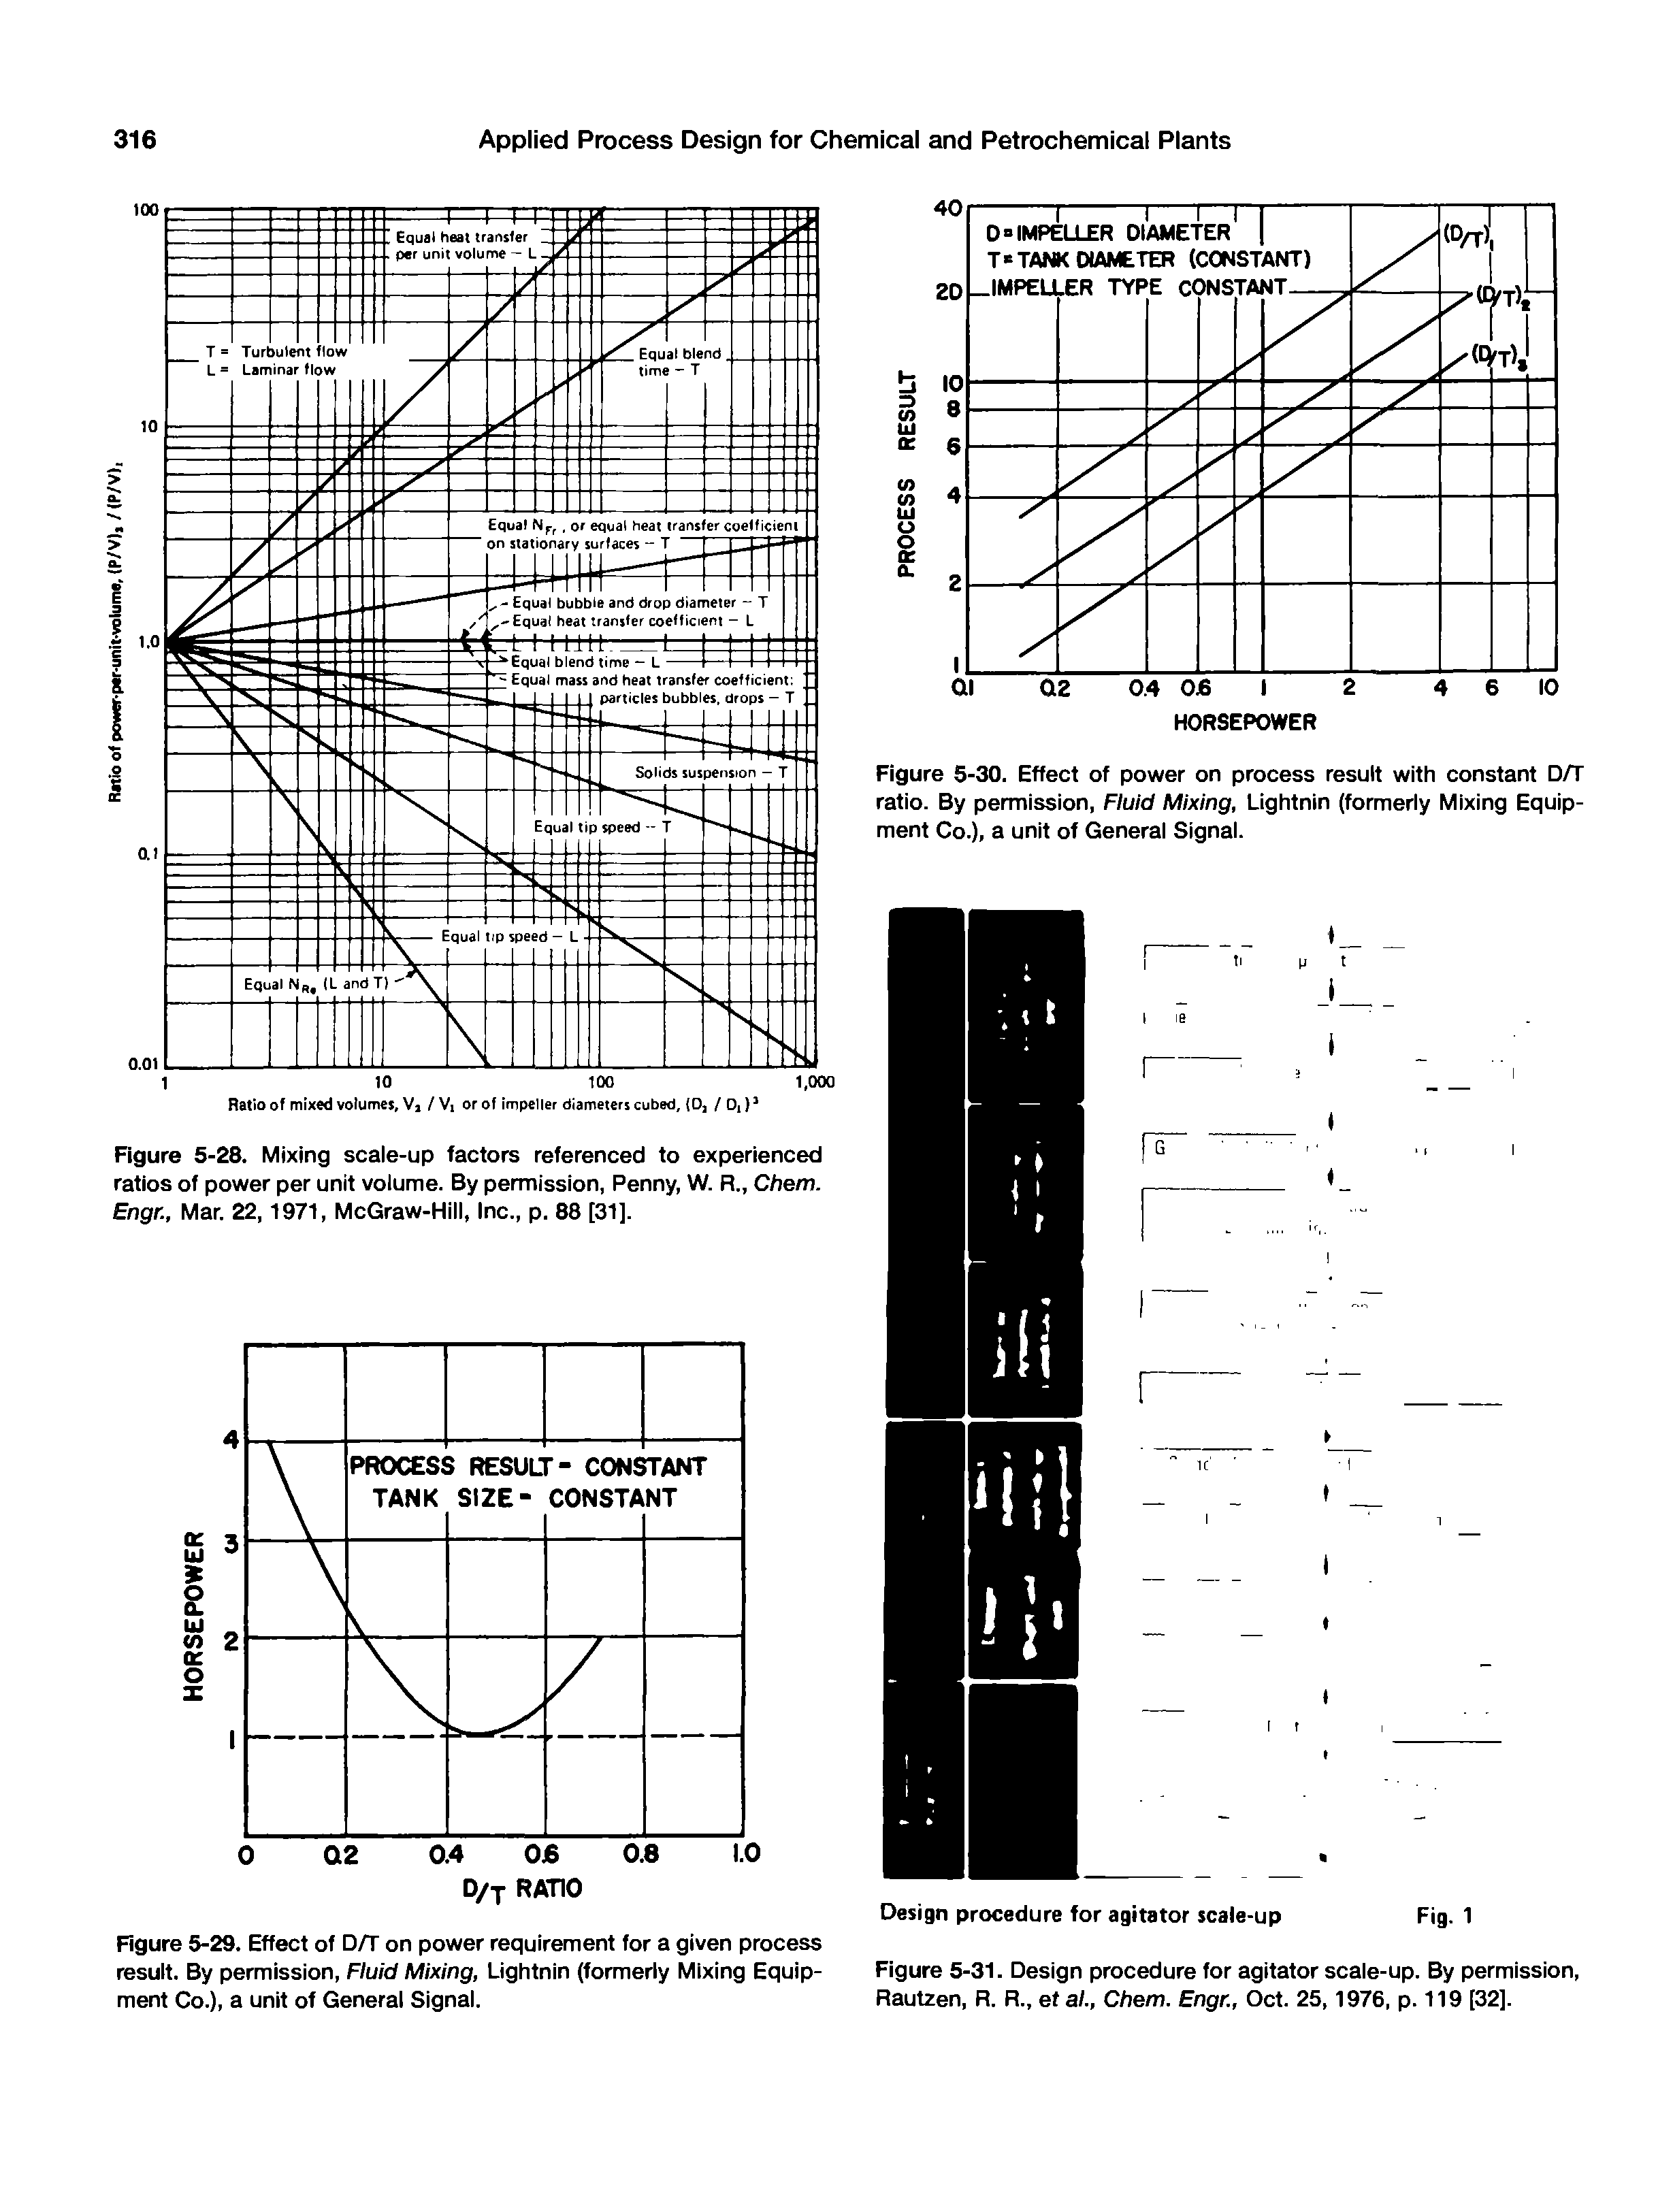 Figure 5-31. Design procedure for agitator scale-up. By permission, Rautzen, R. R., ef a/., Chem. Engr., Oct. 25,1976, p. 119 [32].